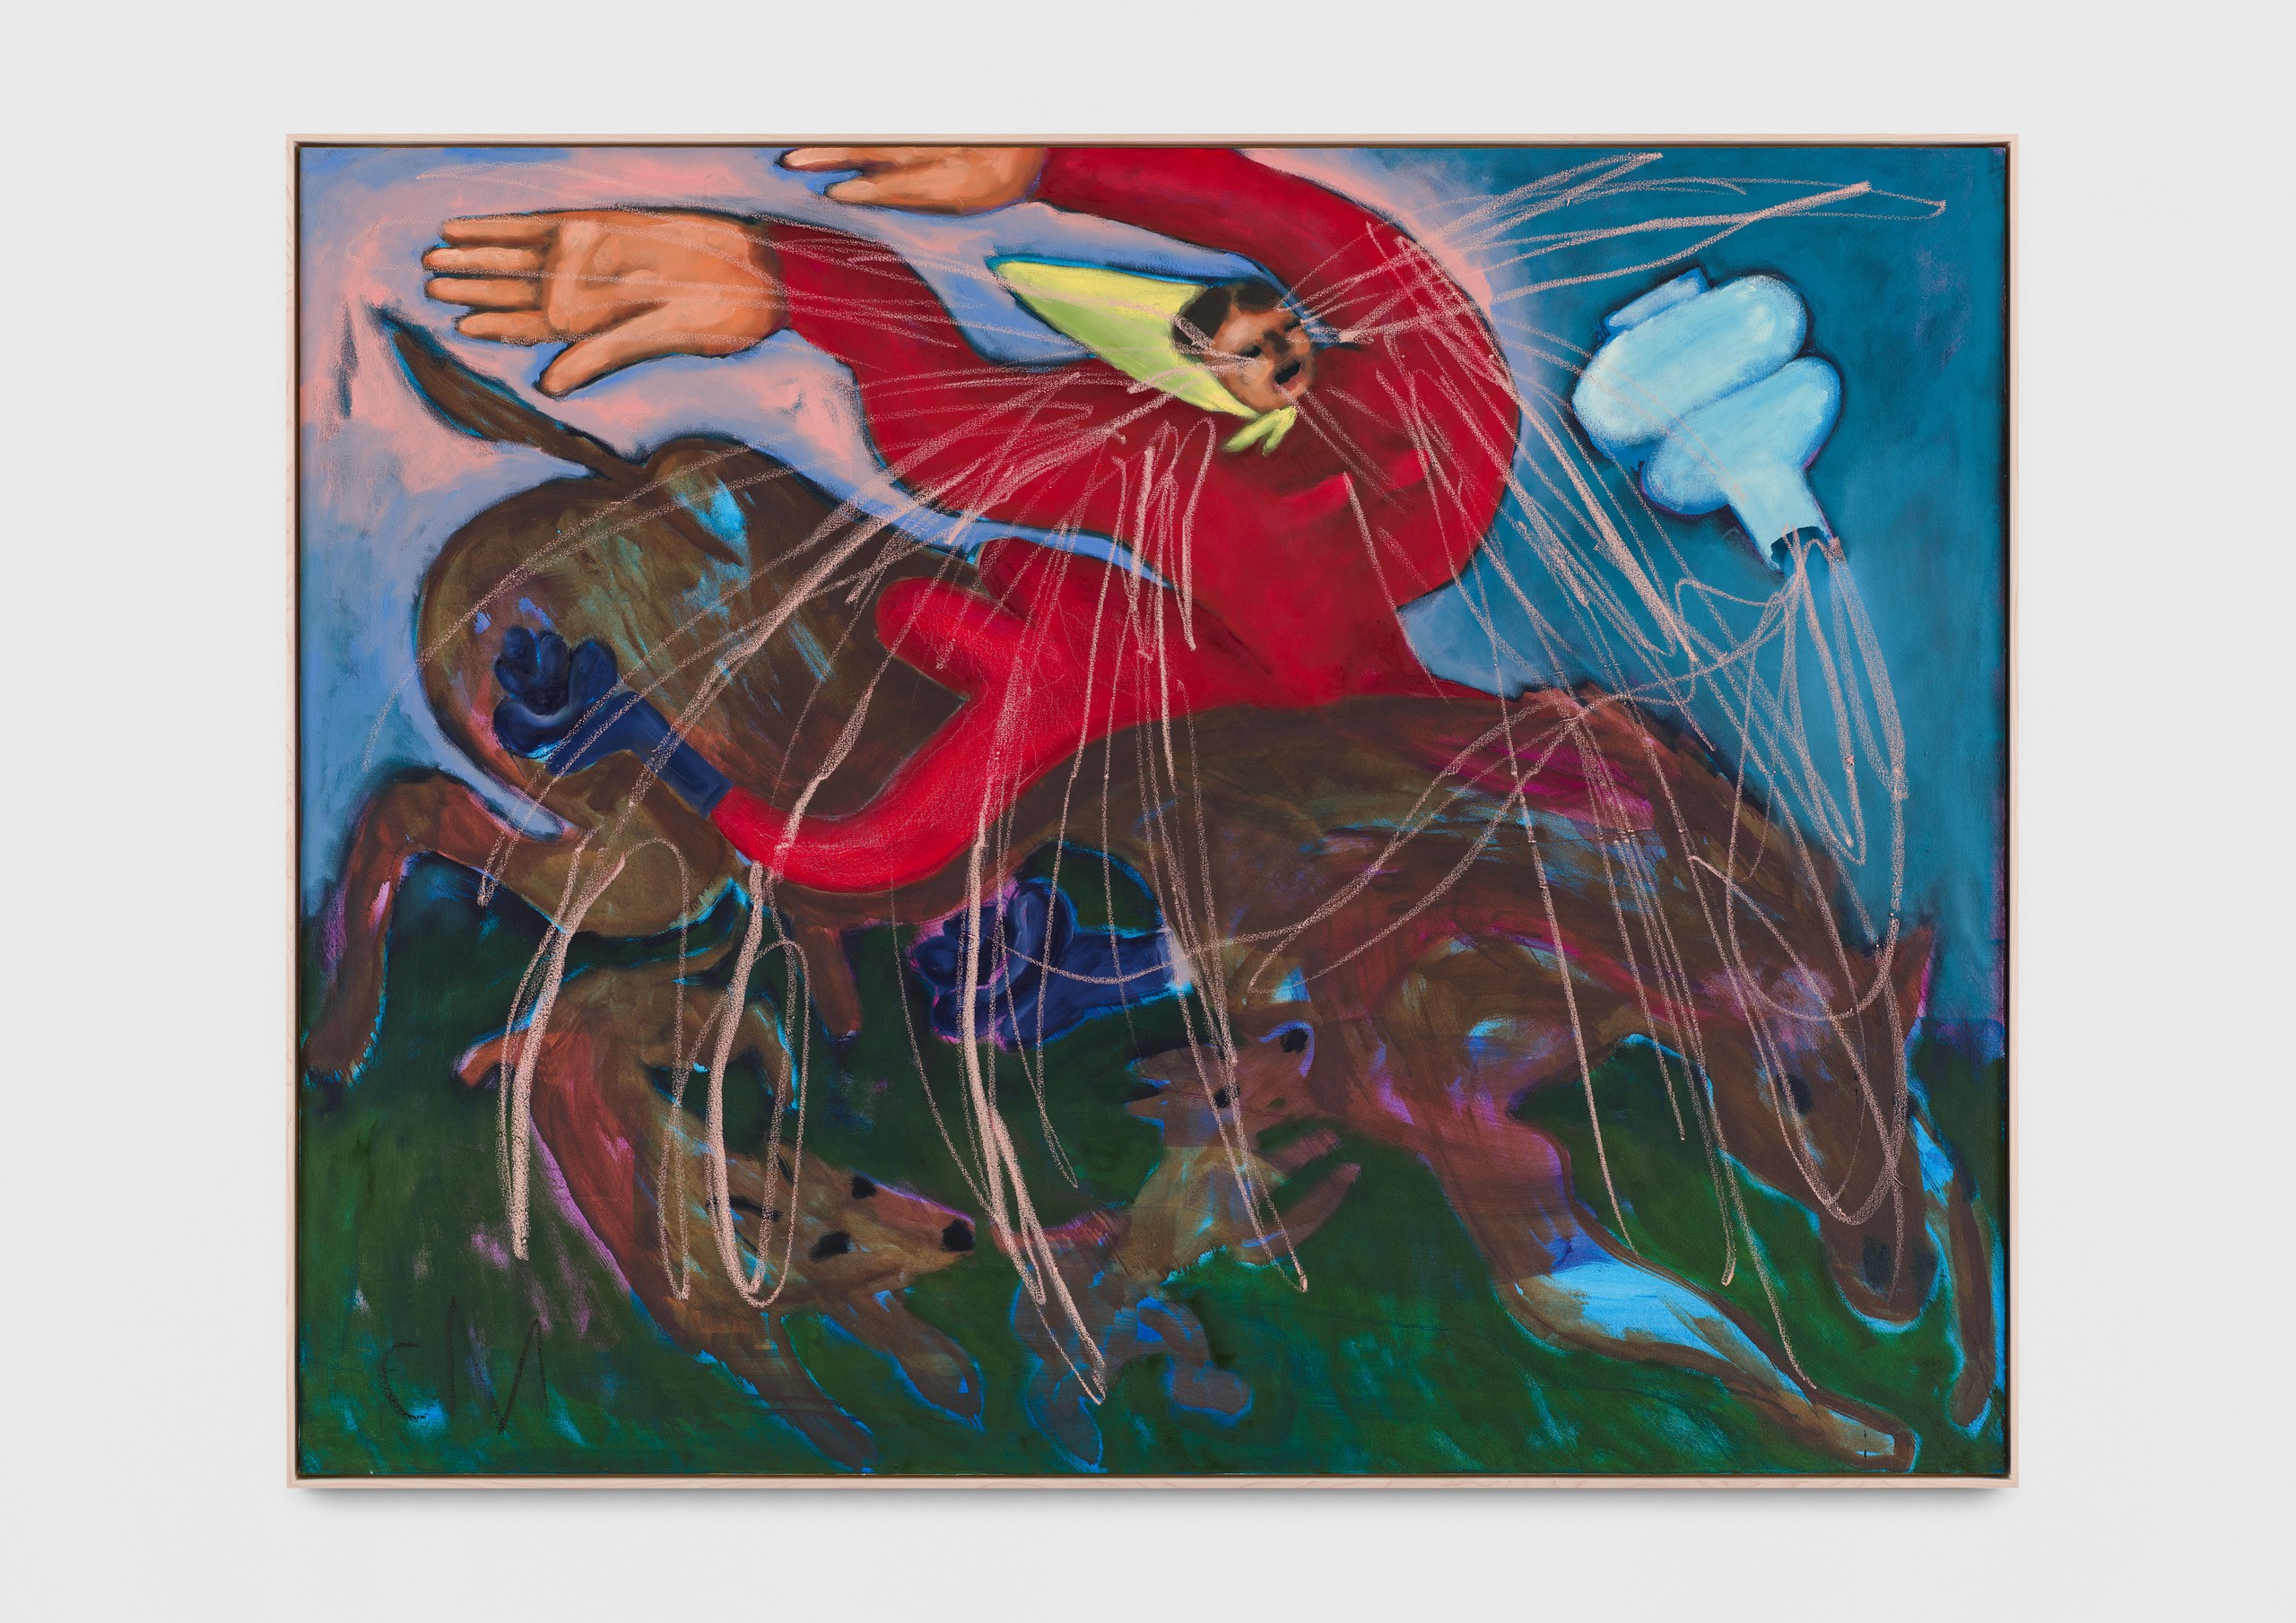 Conny Maier, Wendung mit Tier, 2022, Oil, oil stick, pigments on canvas, 180 x 140 cm